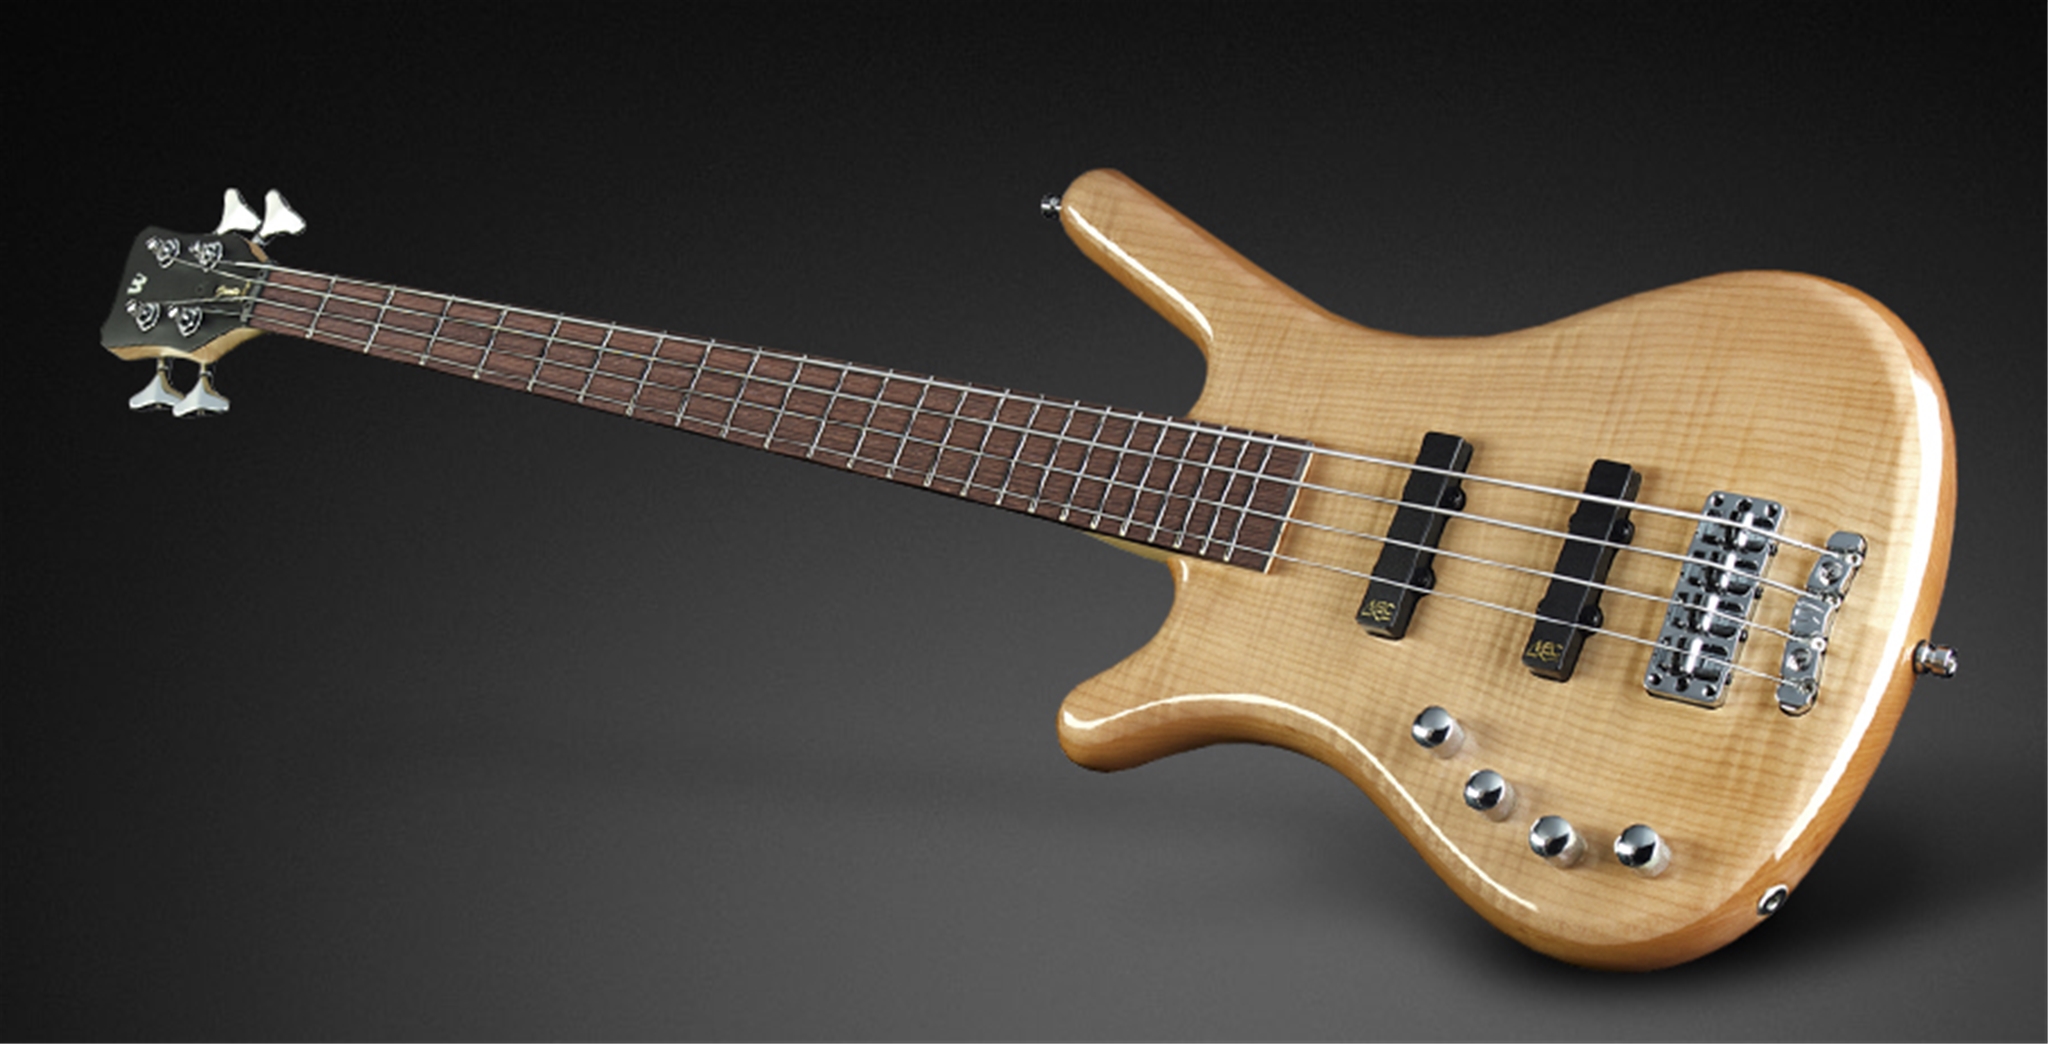 Warwick Rockbass Corvette Premium Natural  Left-Handed 4-String Electric Bass